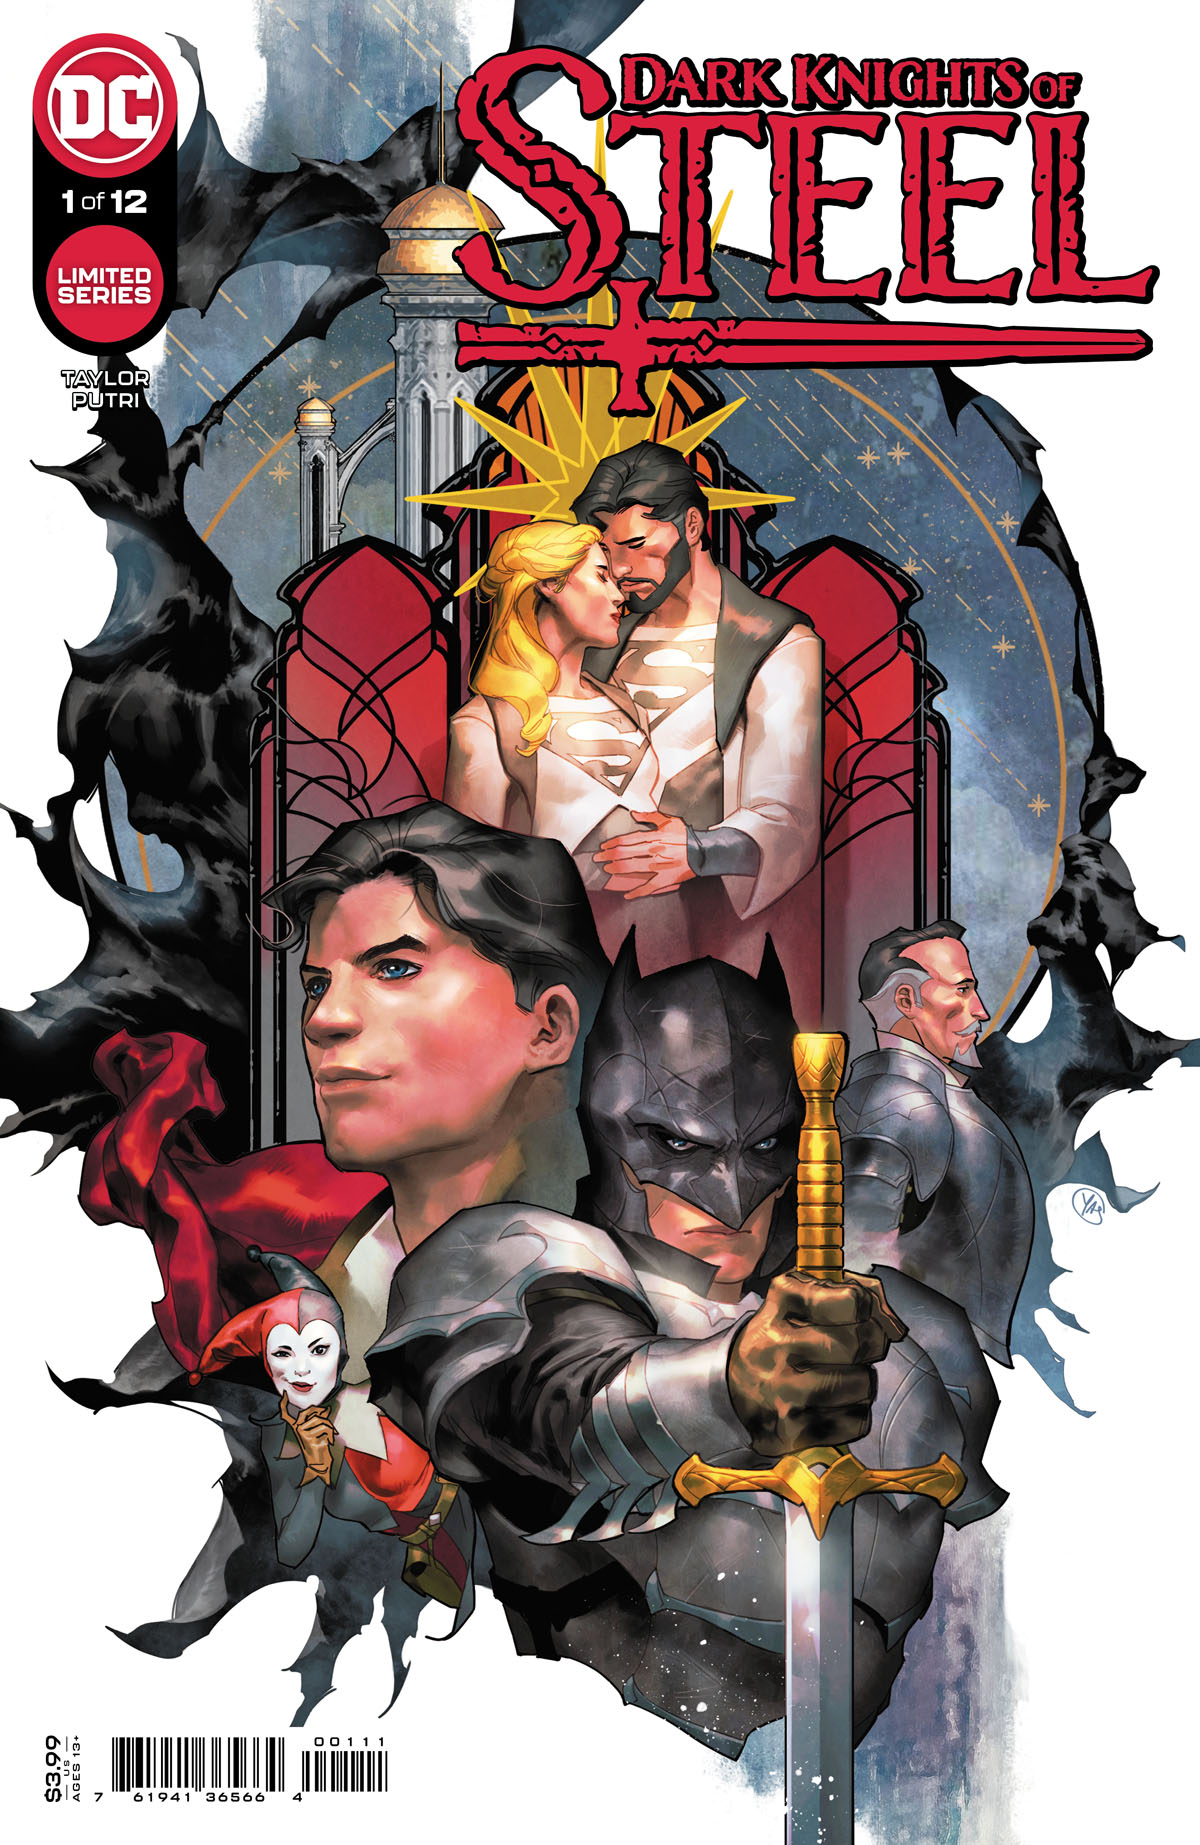 Dark Knights of Steel #1 cover